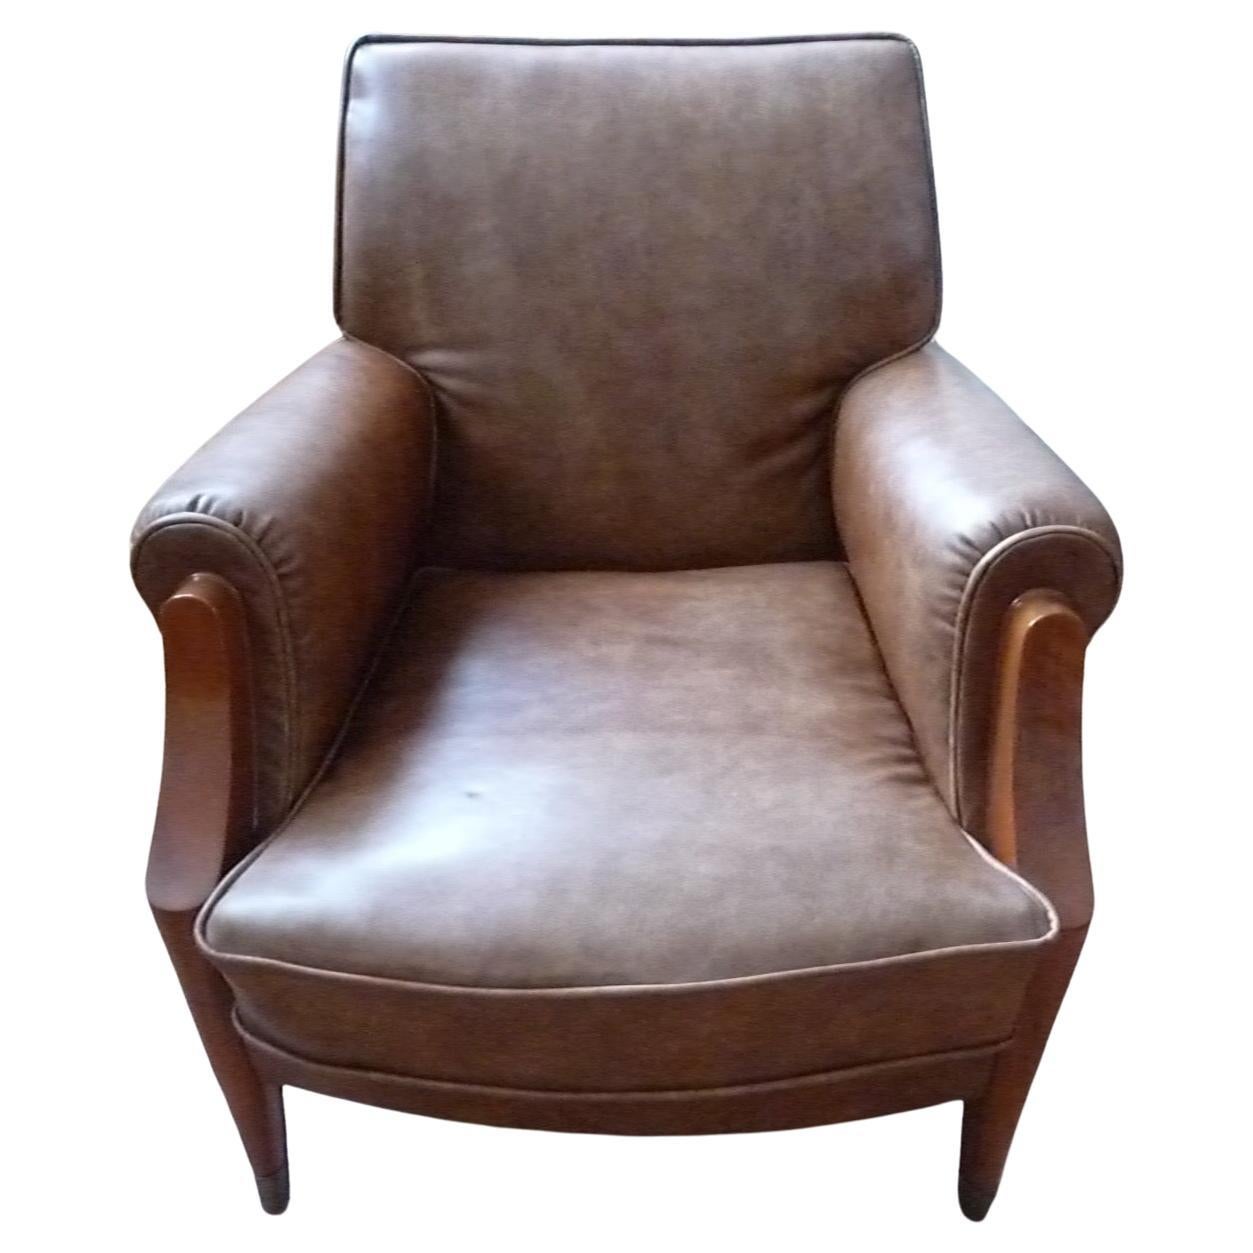 Single French Art Déco Club Chair by Baptistin Spade. 1930s.